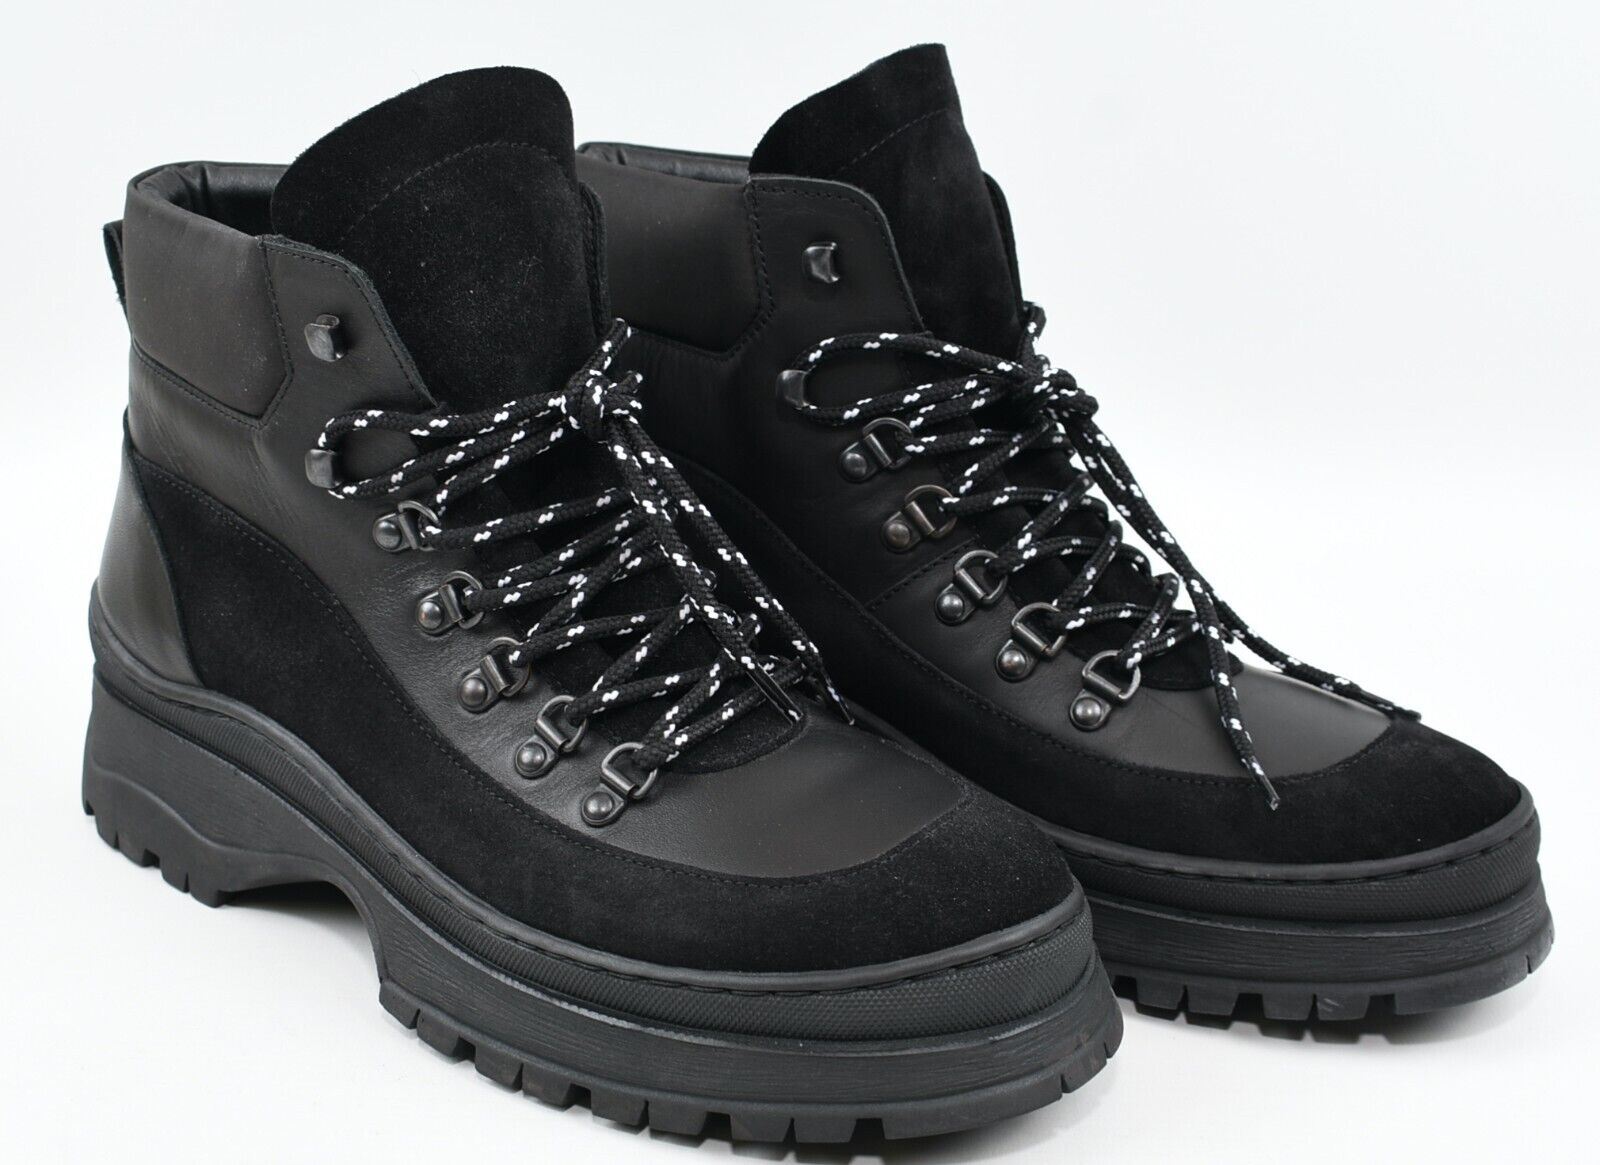 TED BAKER Men's WESTONN Leather Hiker Boots, Black, size UK 9 /EU 43